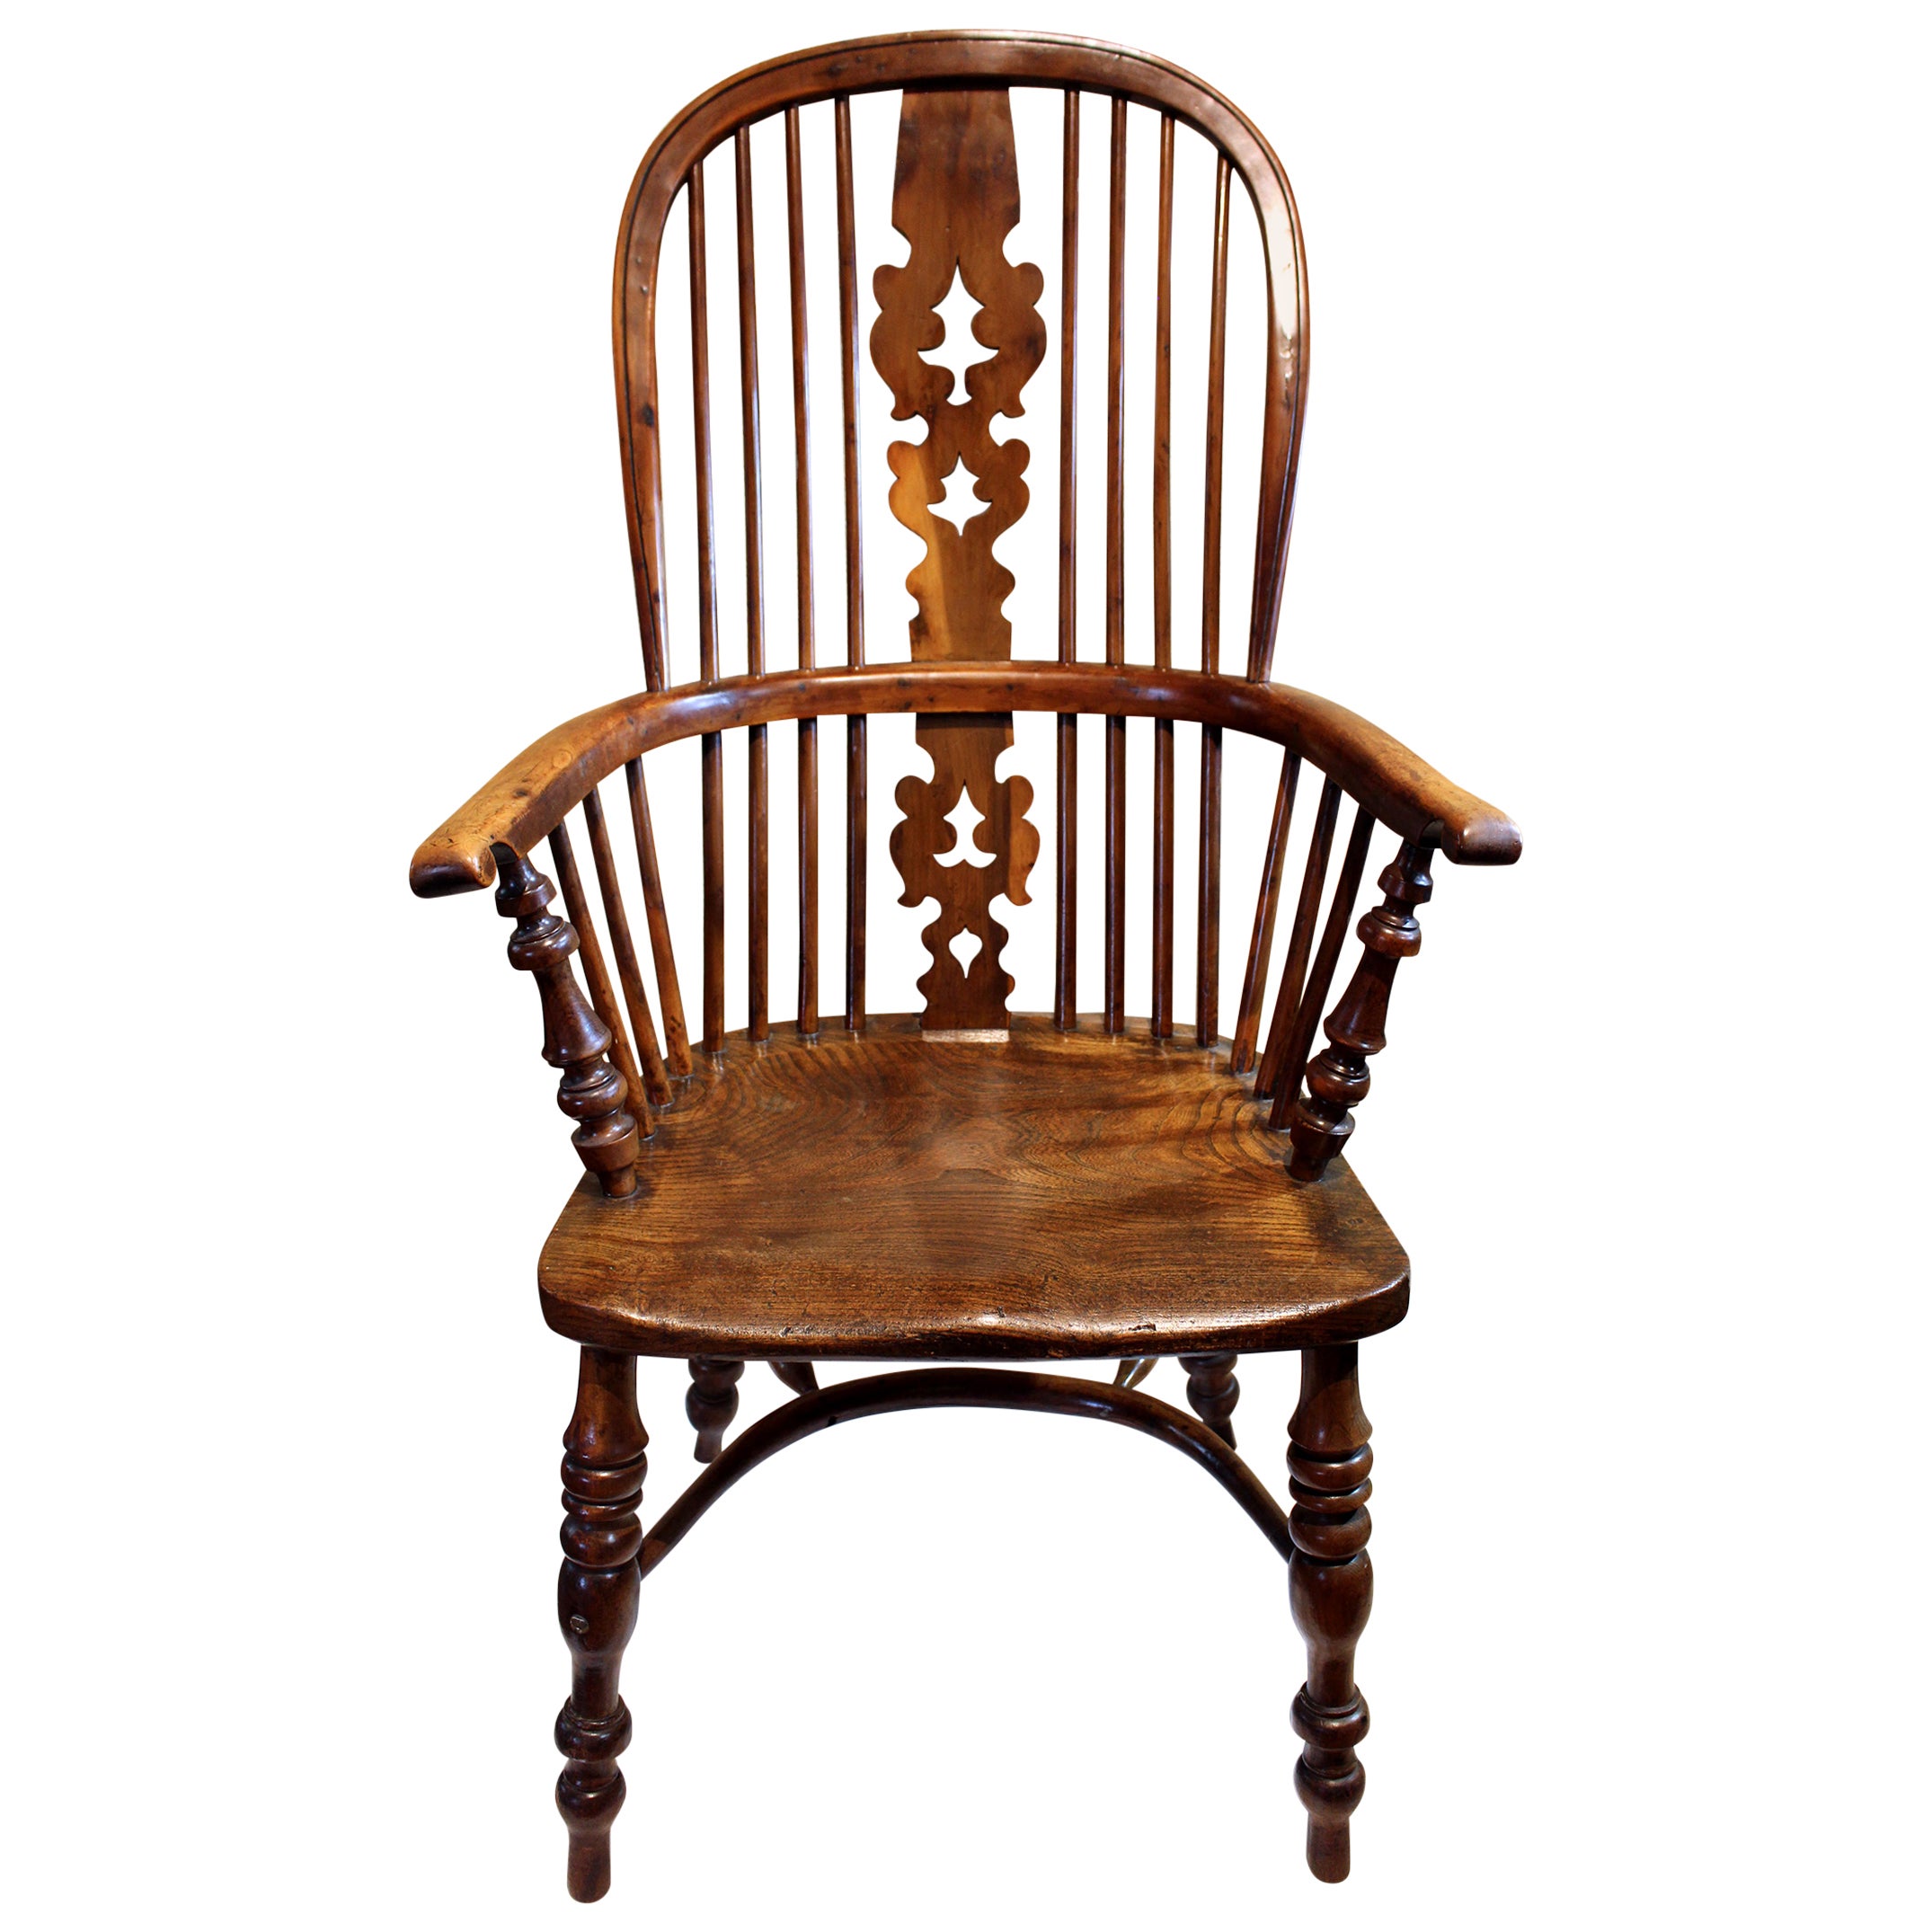 Circa 1830 English High Back Windsor Arm Chair, Yew Wood For Sale